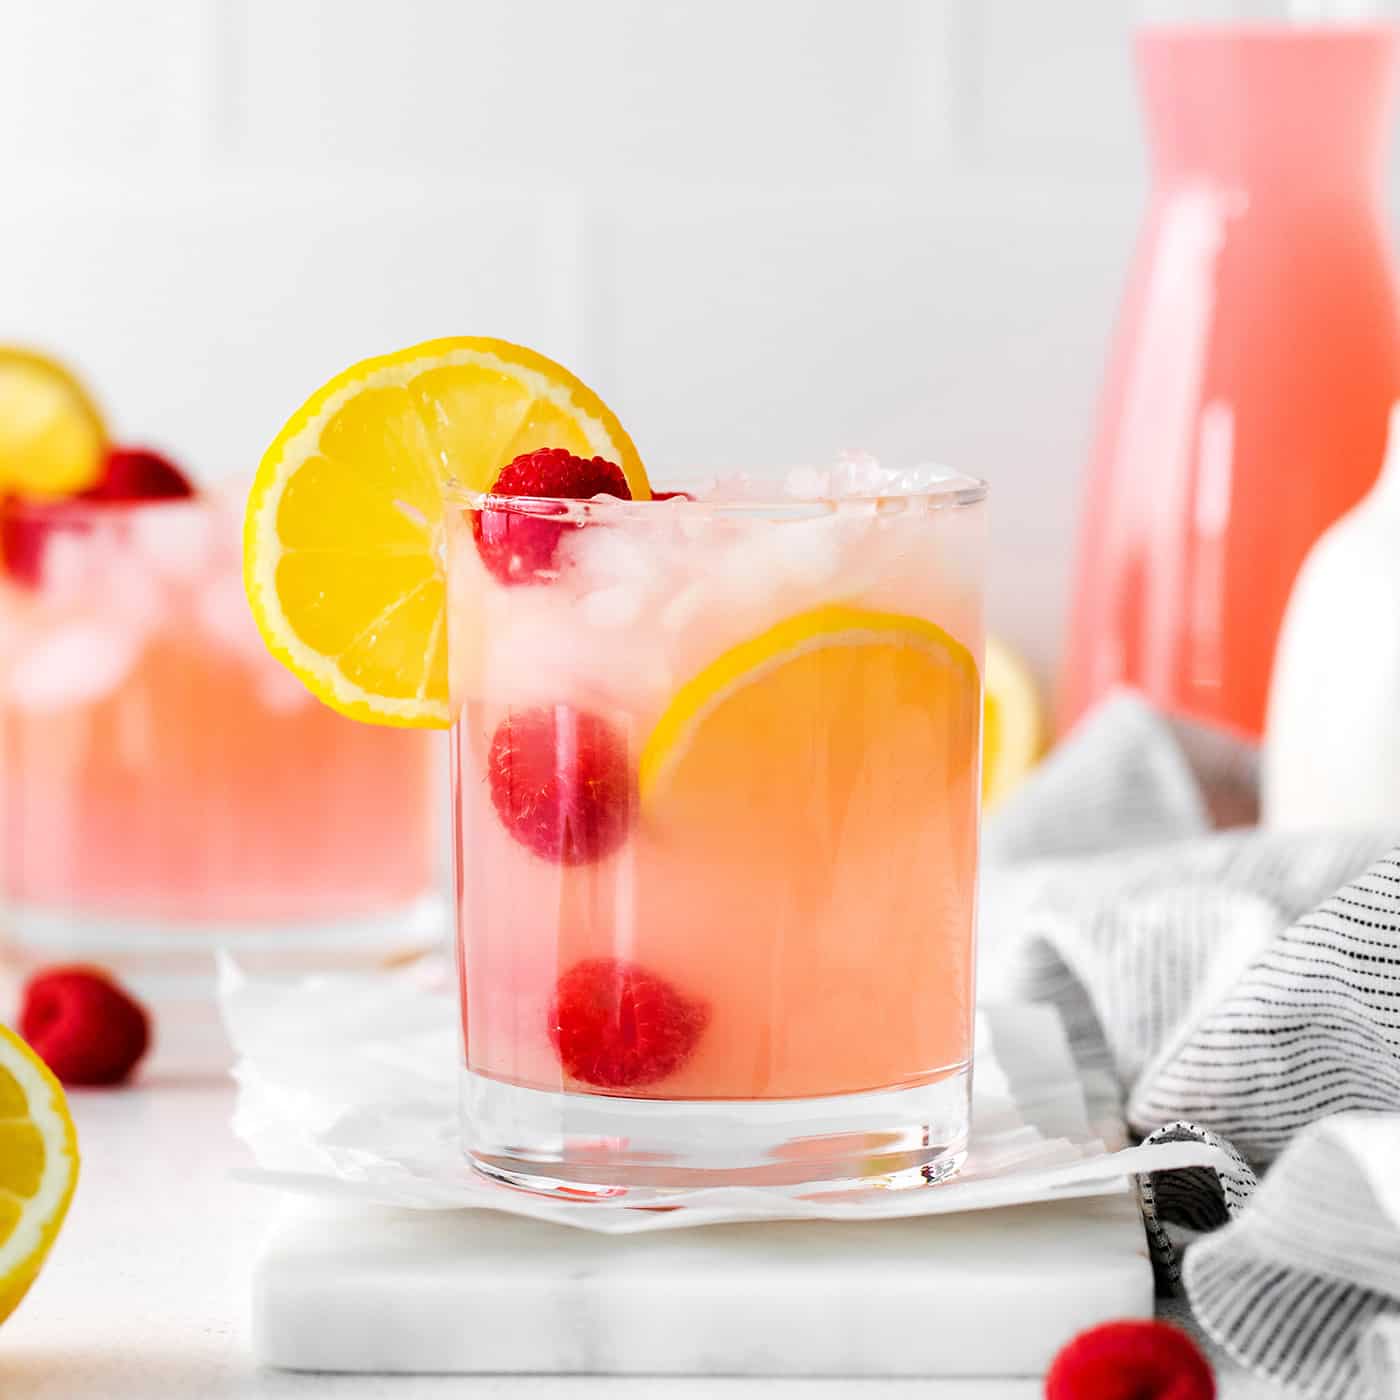 A pink lemonade margarita garnished with raspberries and lemon